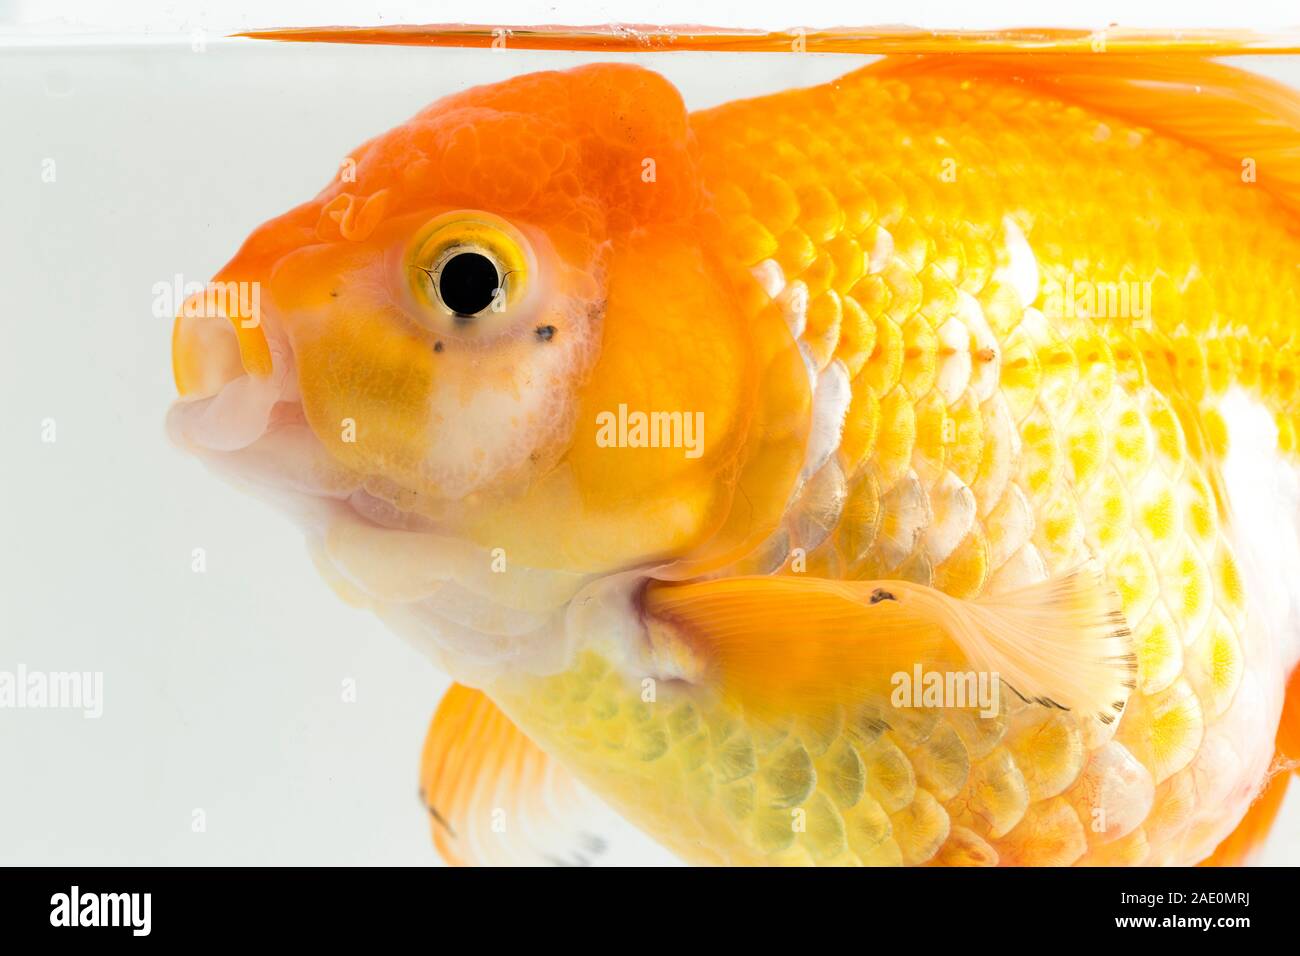 Beautiful Orange Oranda Goldfish (Carassius auratus) diving in fresh water glass tank isolated on white background Stock Photo